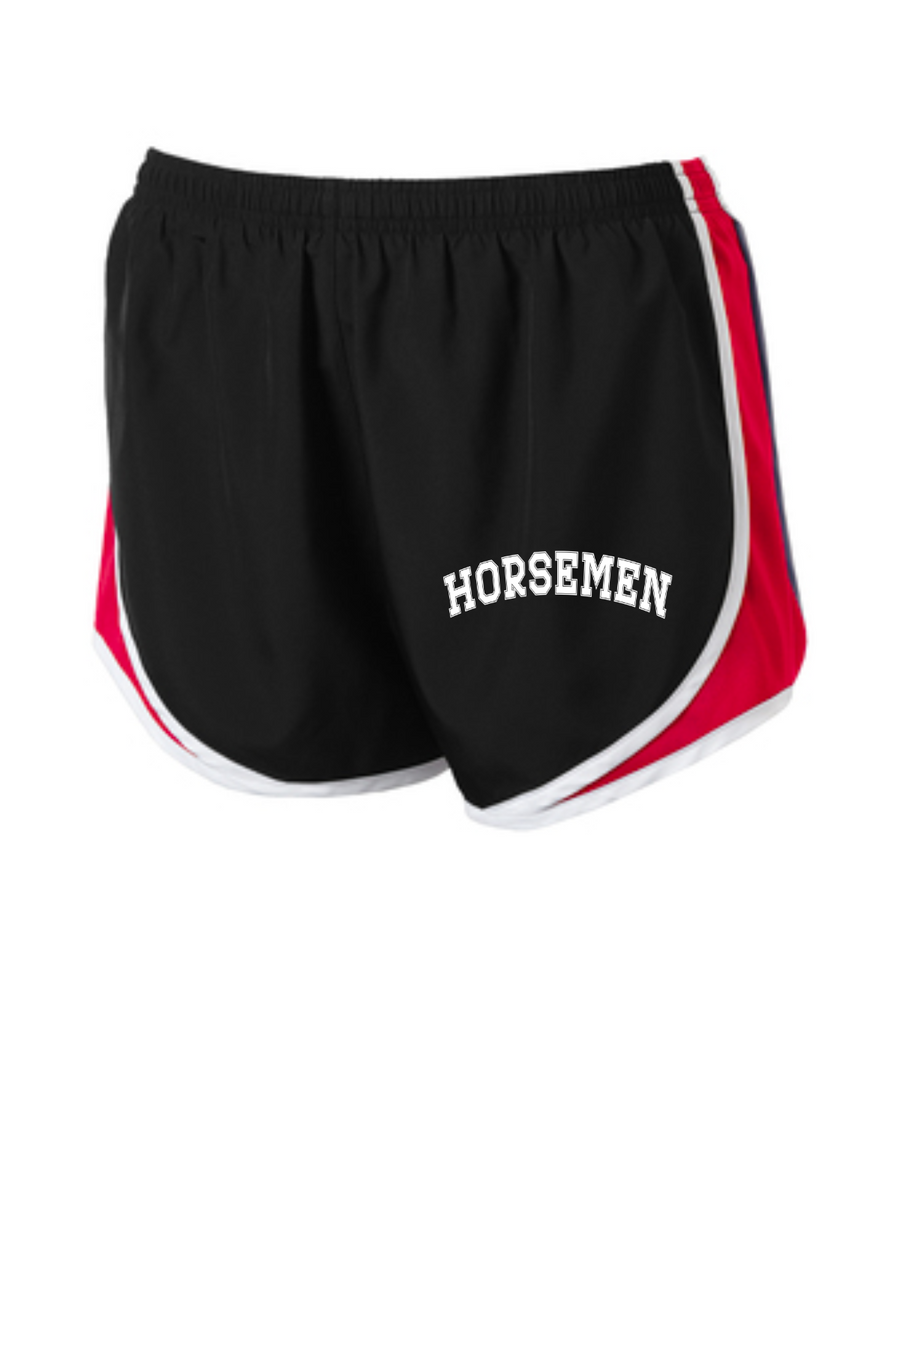 Sleepy Hollow Horsemen PTA 2023/24 Spirit Wear On-Demand-Sport-Tek Ladies Cadence Short